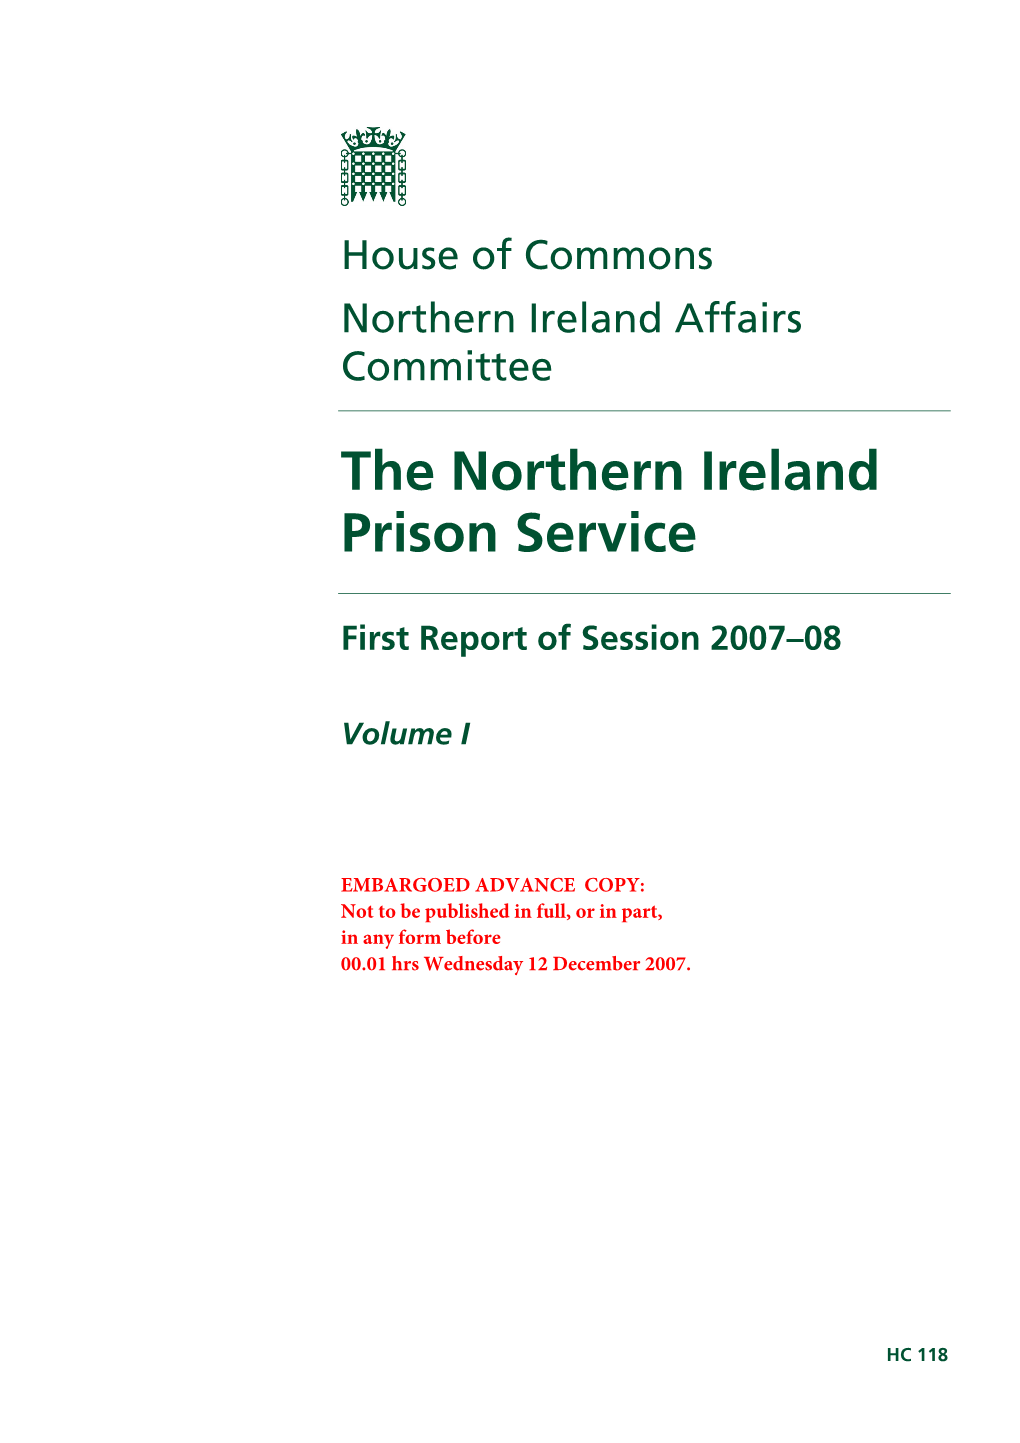 The Northern Ireland Prison Service